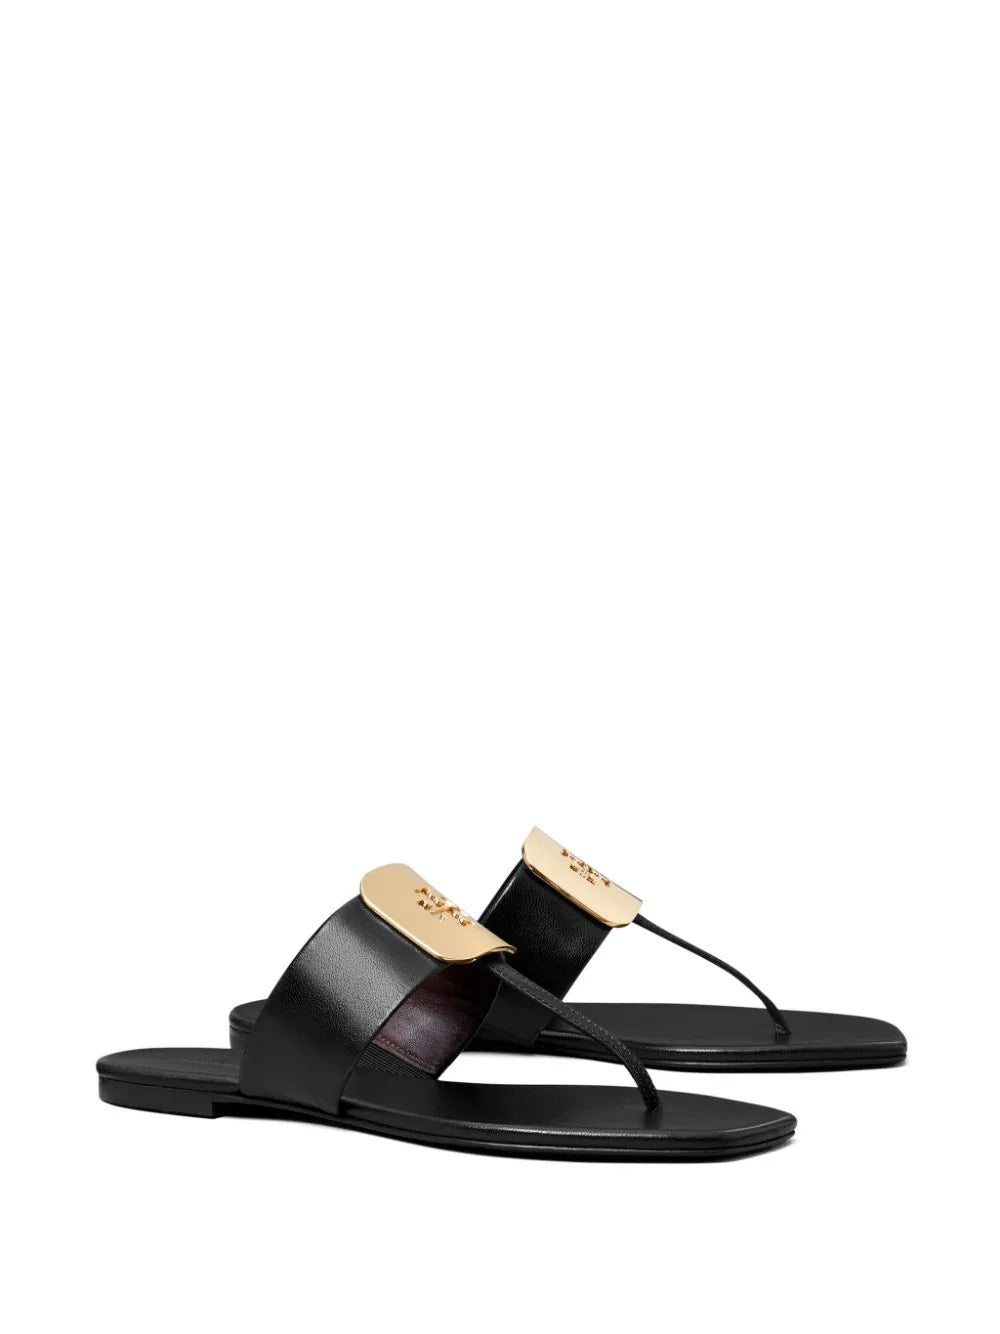 Tory Burch 154236 Woman PERFECT BLACK Sandals - Zuklat